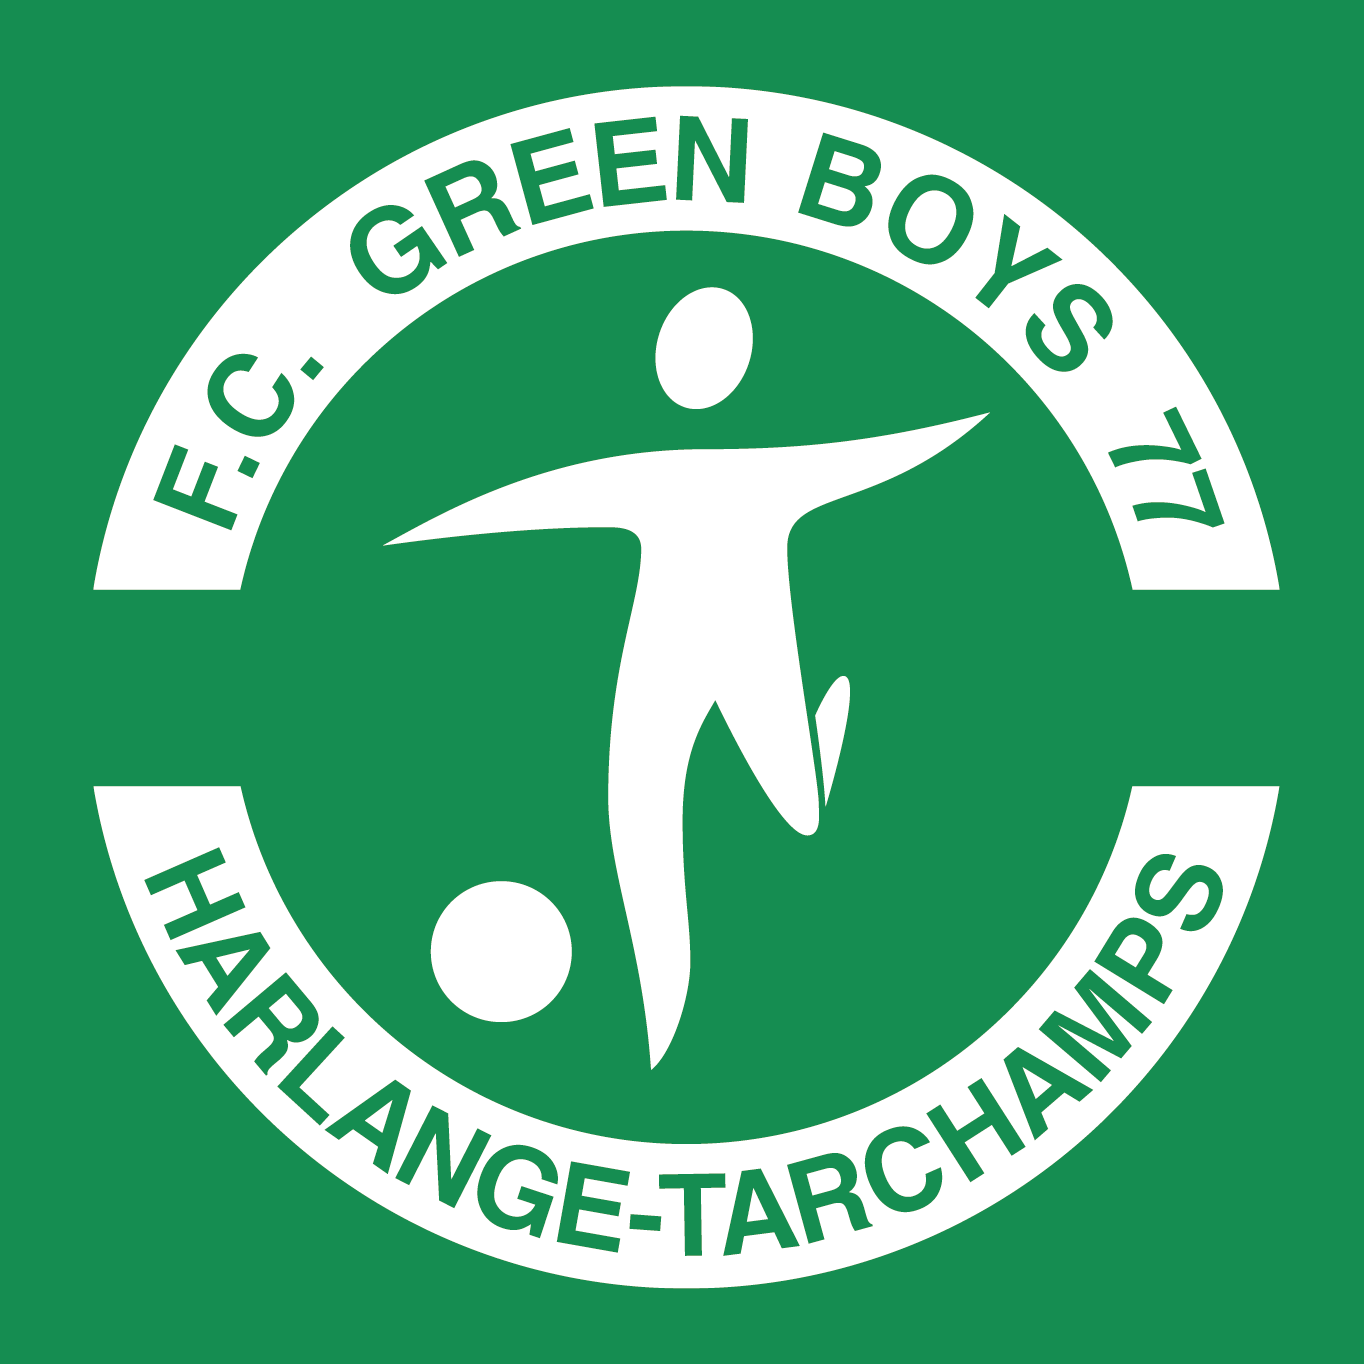 FC Green Boys 77 Harlange-Tarchamps